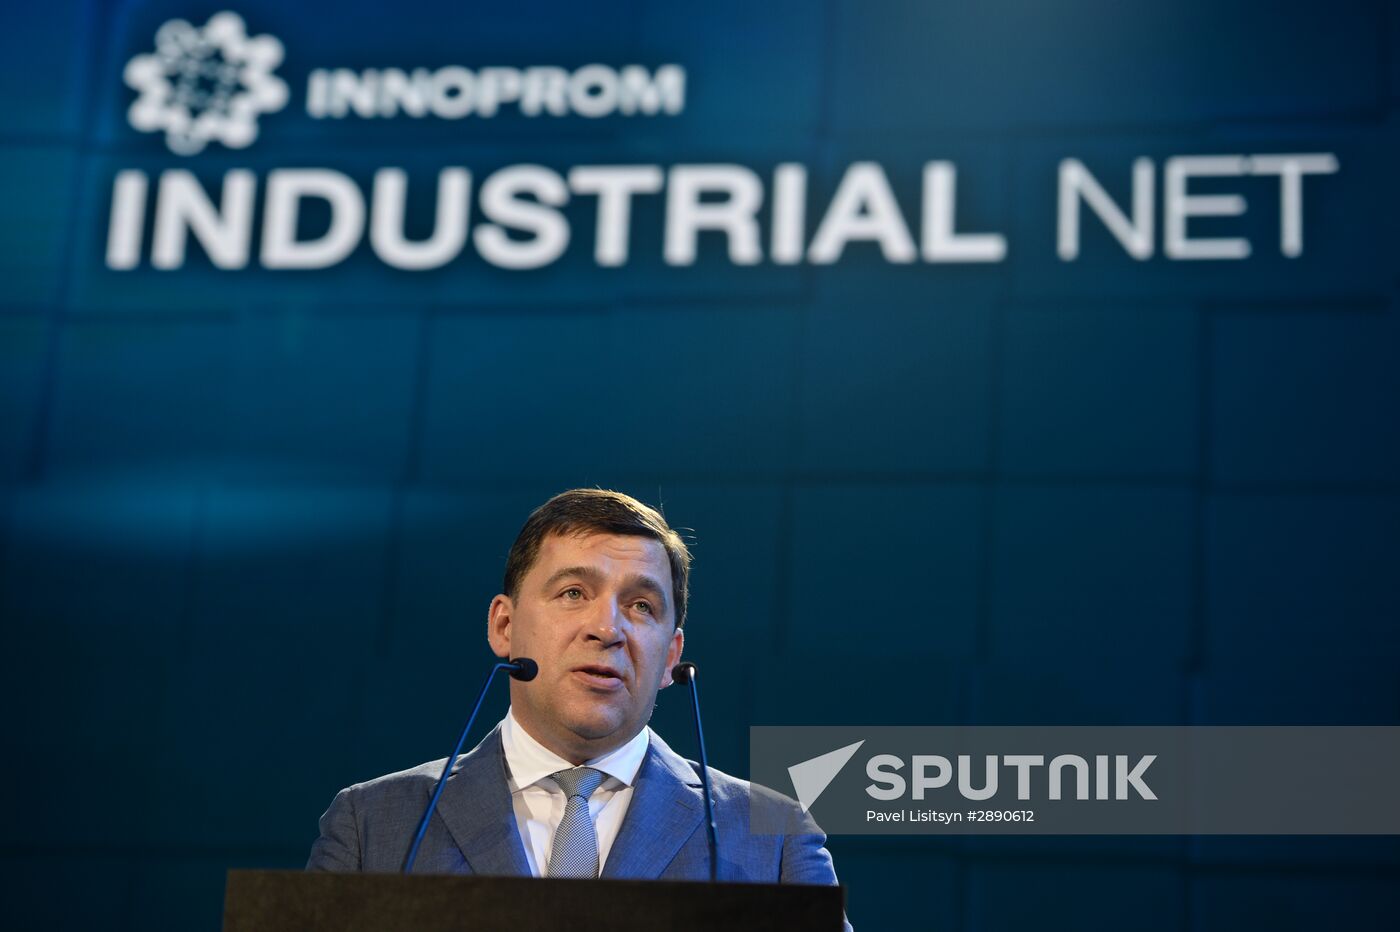 2016 Innoprom International Industrial Trade Fair opes in Yekaterinburg